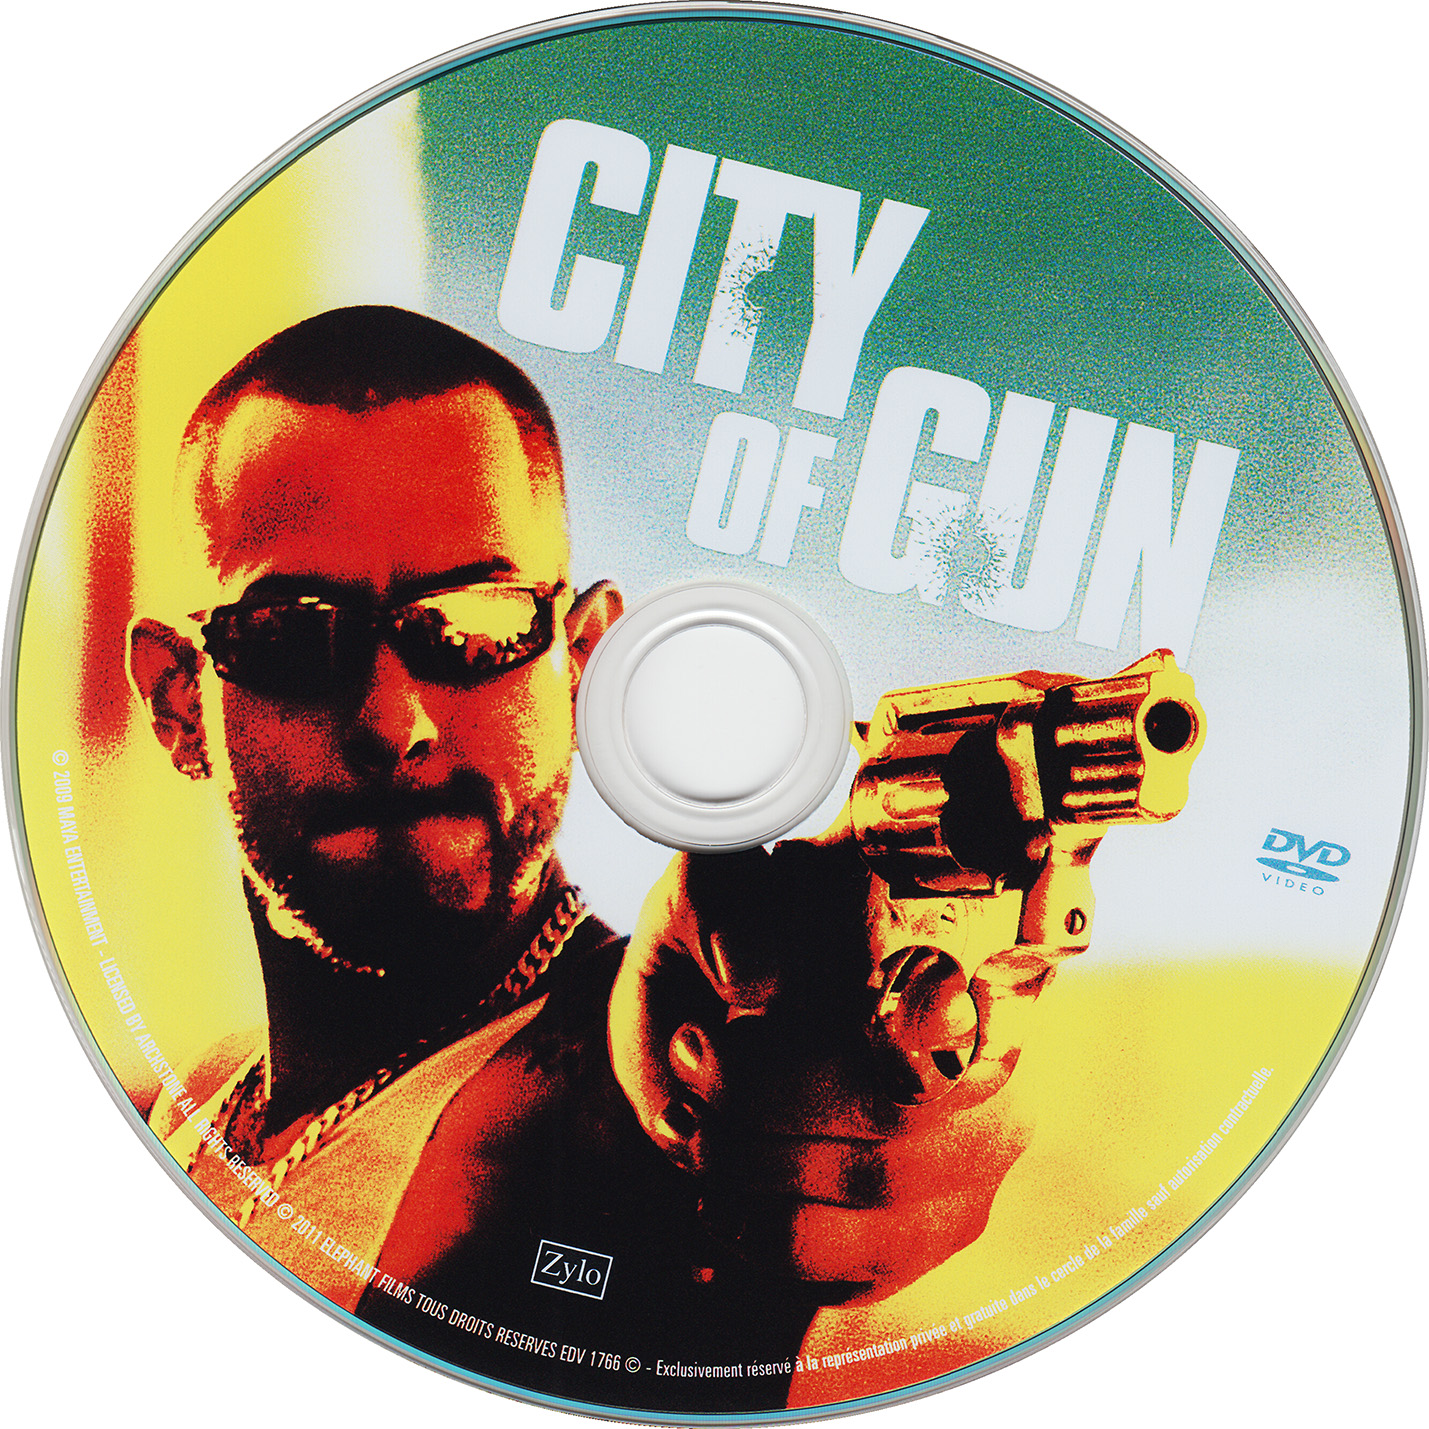 City of gun